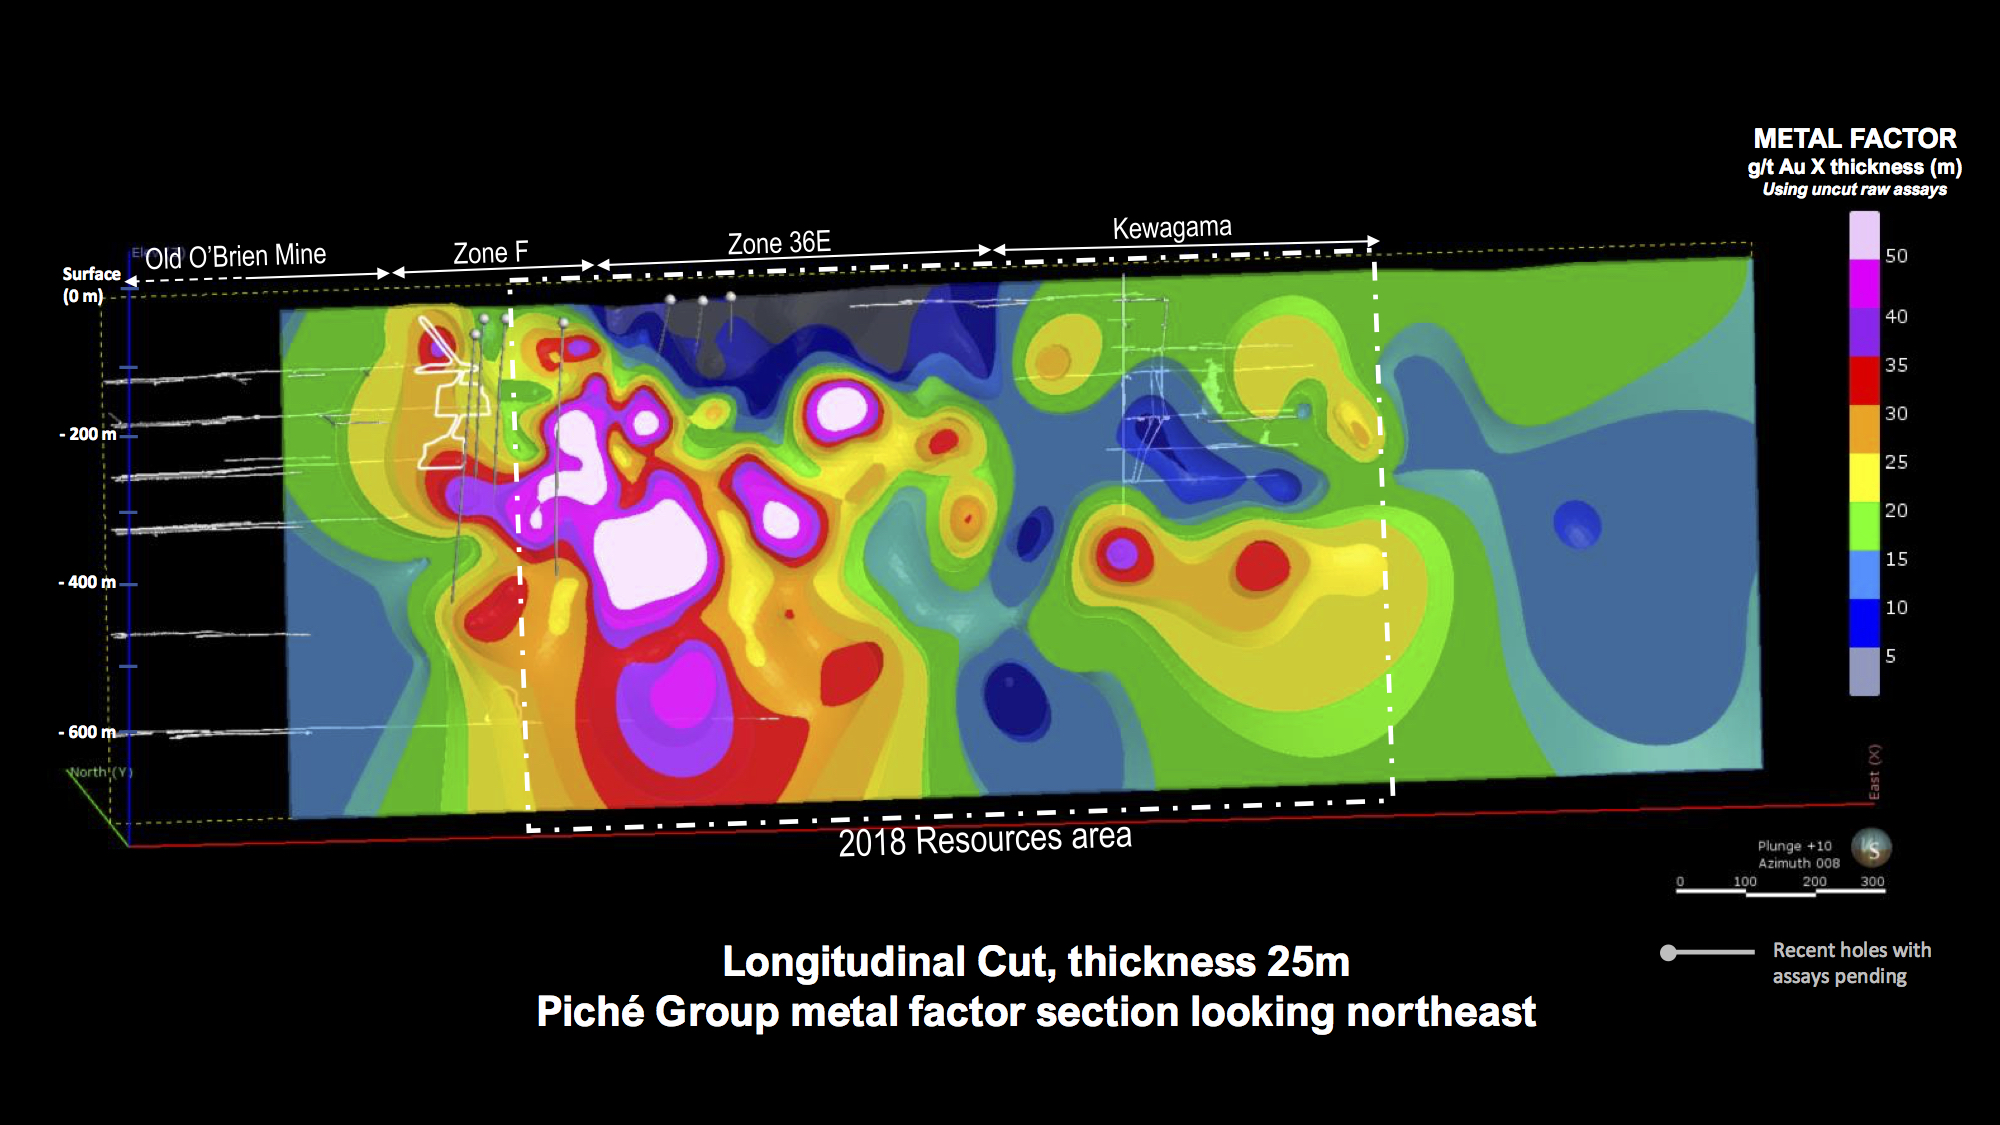 Longitudinal cut 25 m thickness, Piché Group metal factor looking northeast